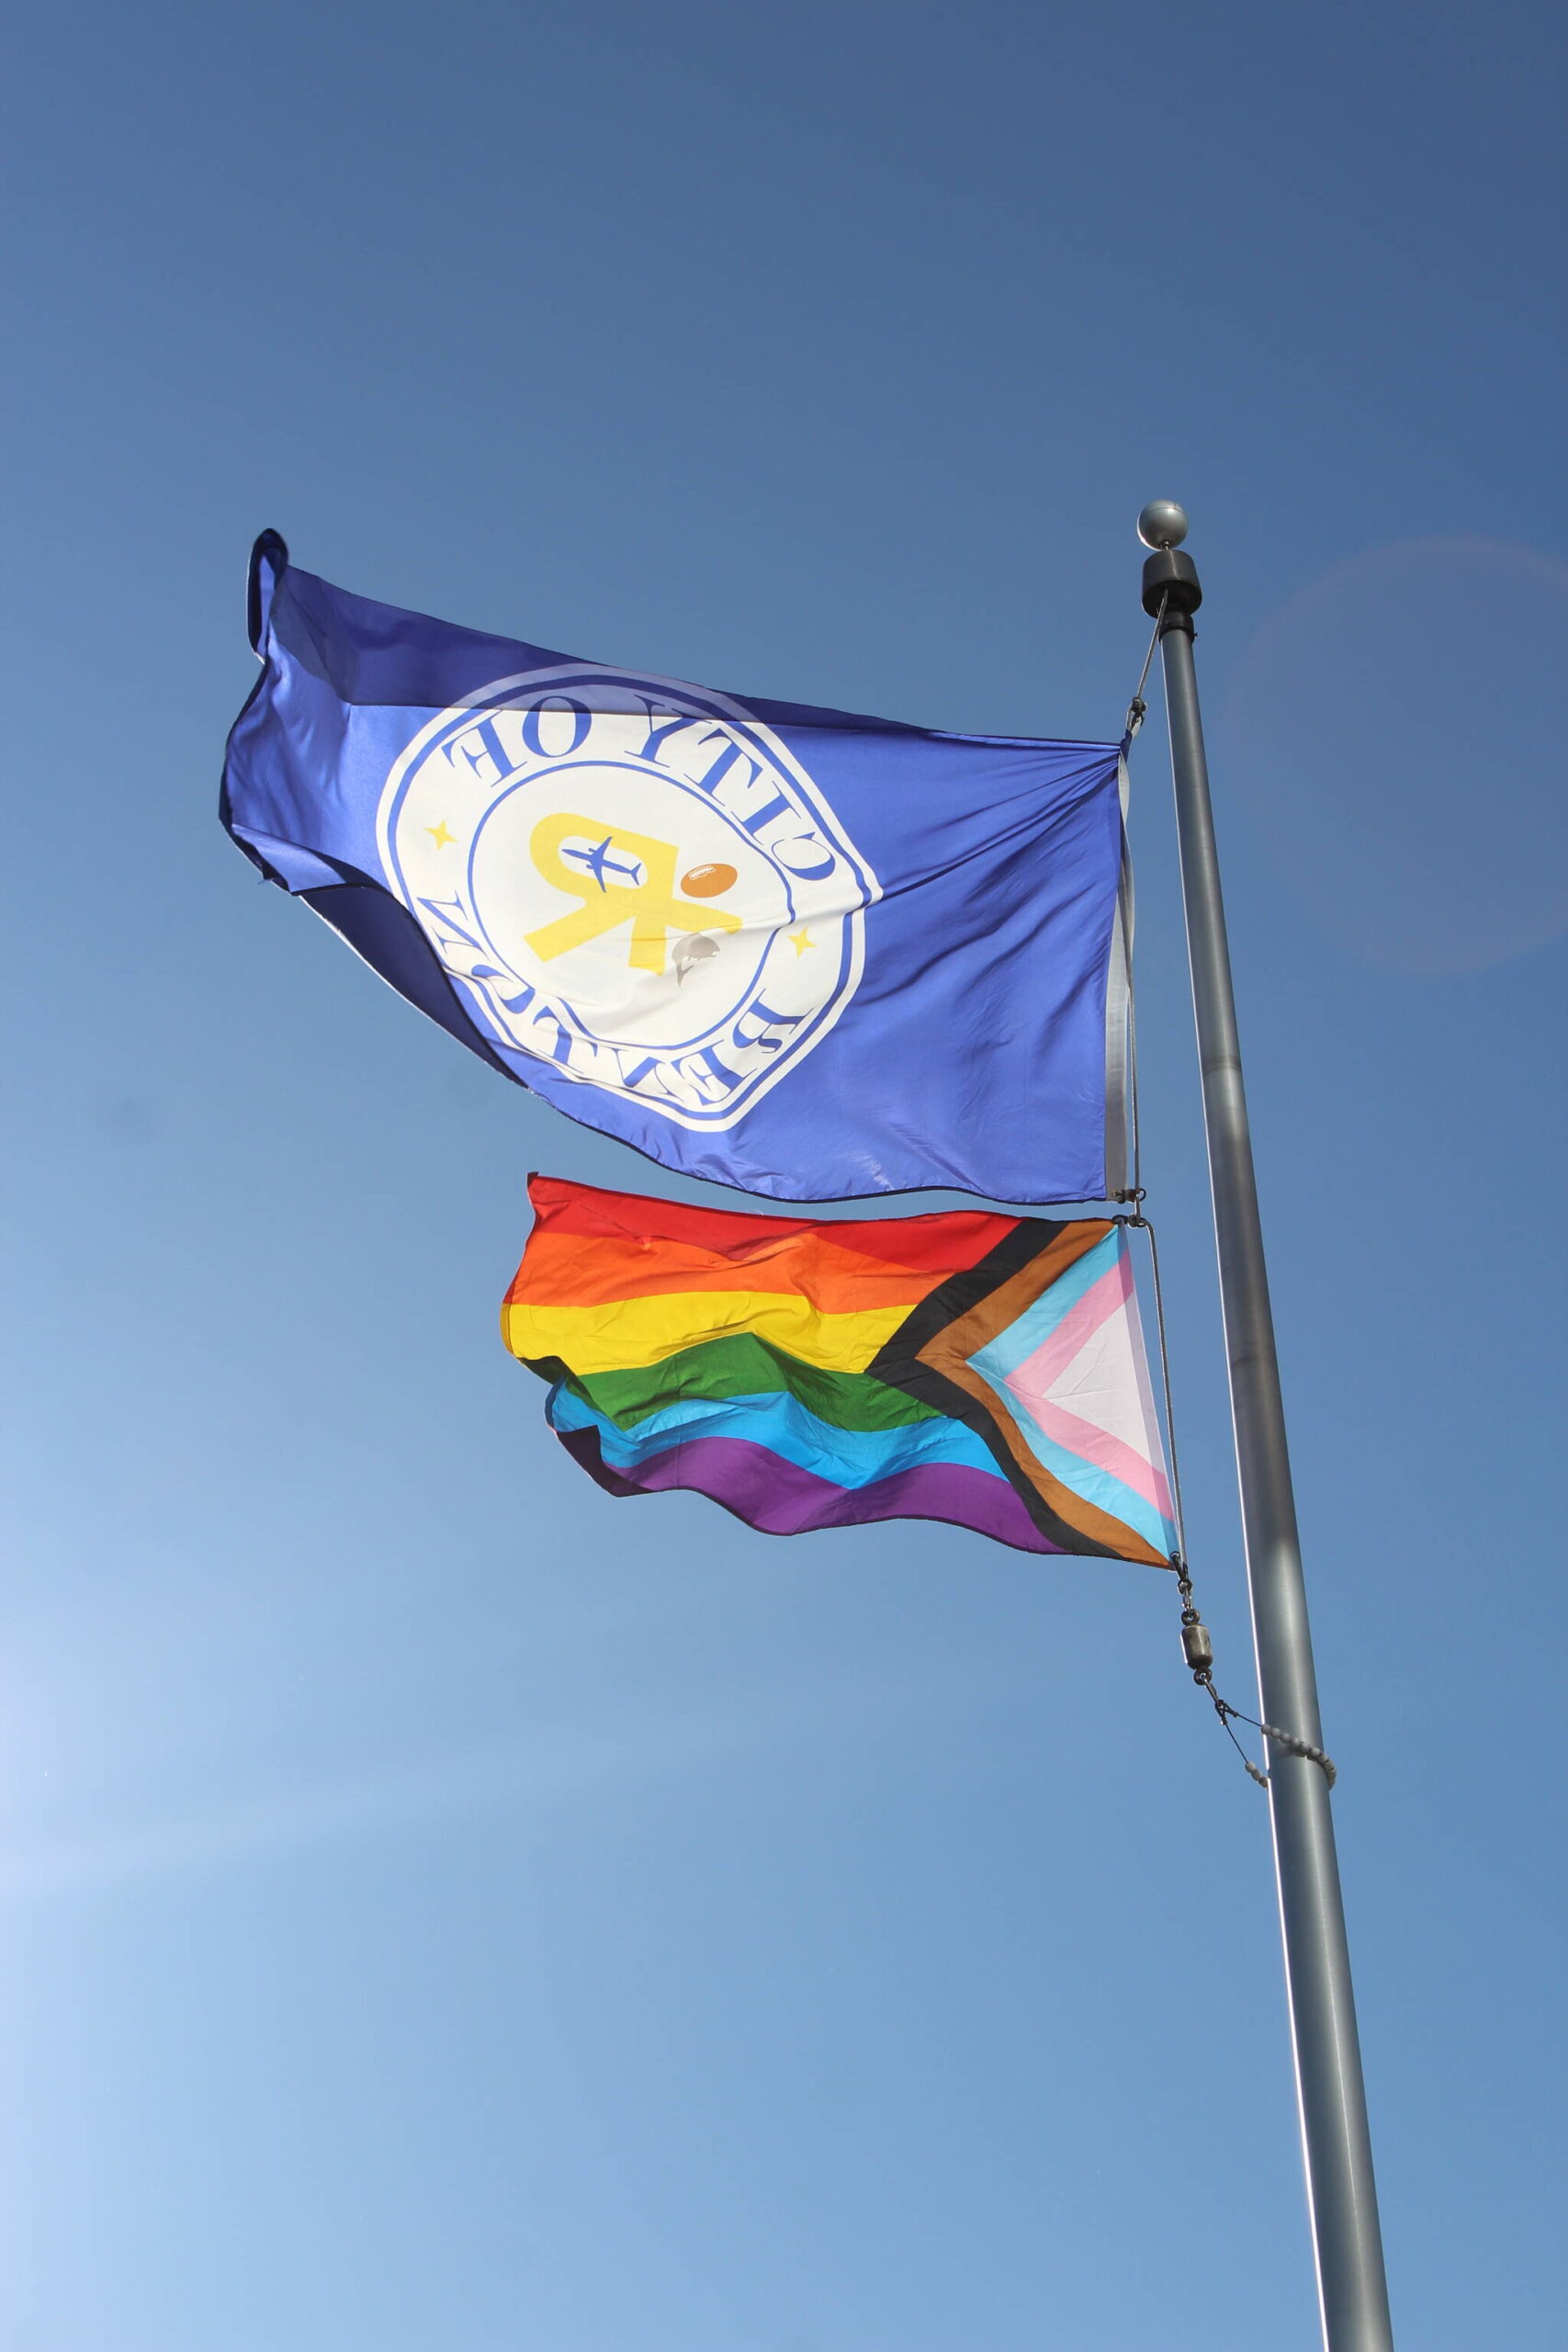 Bailey Jo Josie / Renton Reporter
The Pride Flag flies above Renton City Hall in June.